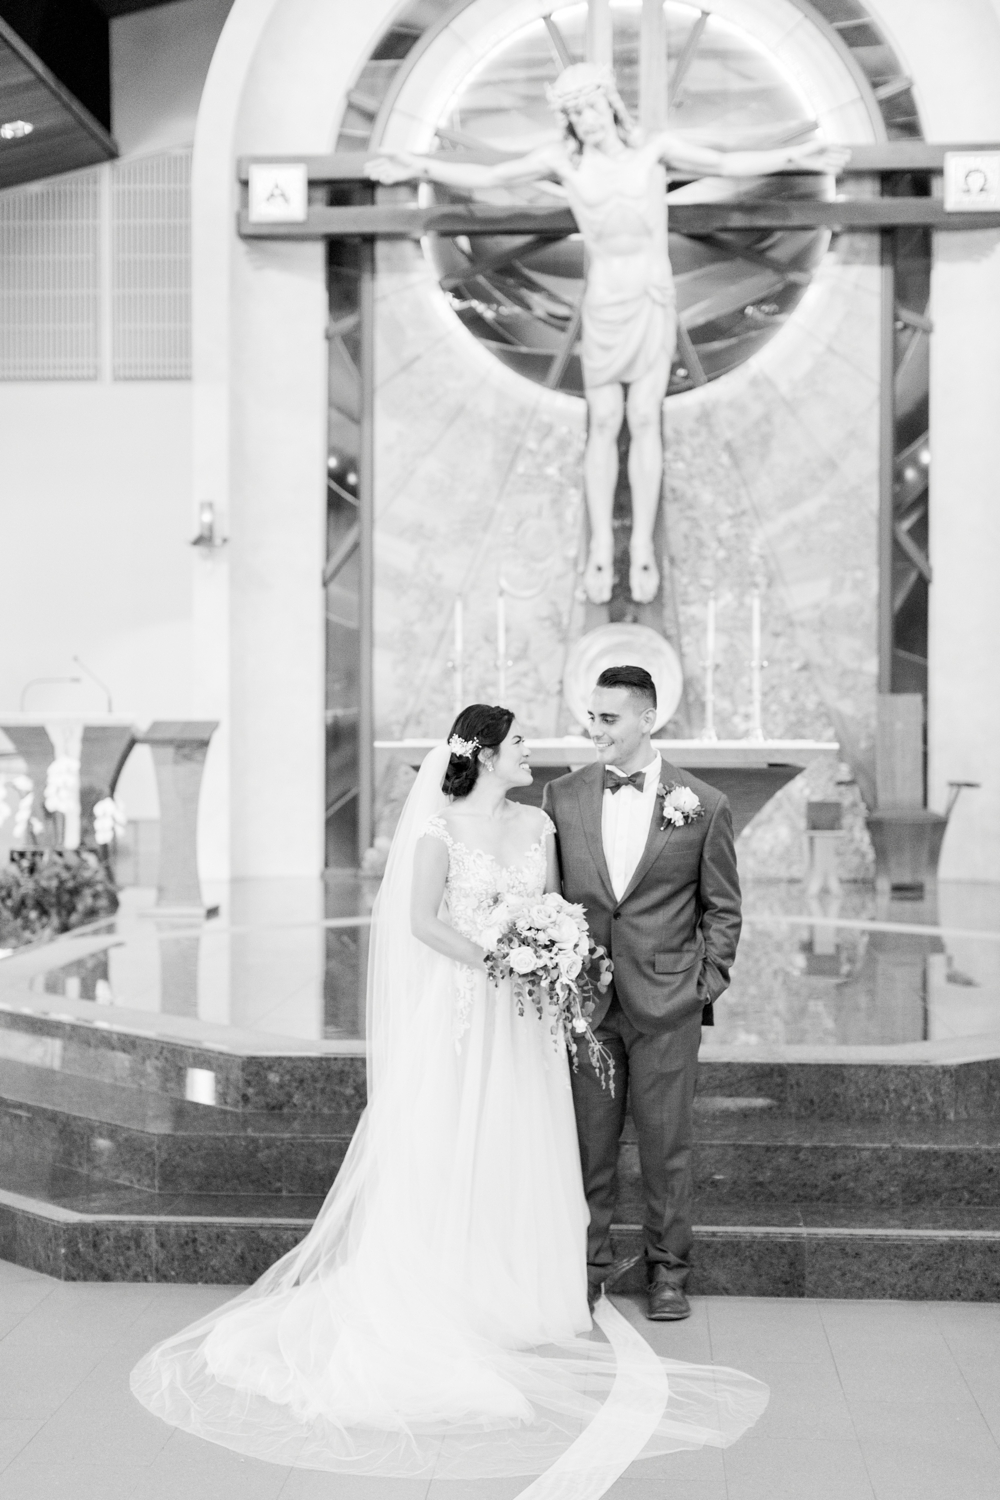 Our Lady of Mount Carmel wedding - San Diego wedding photographer